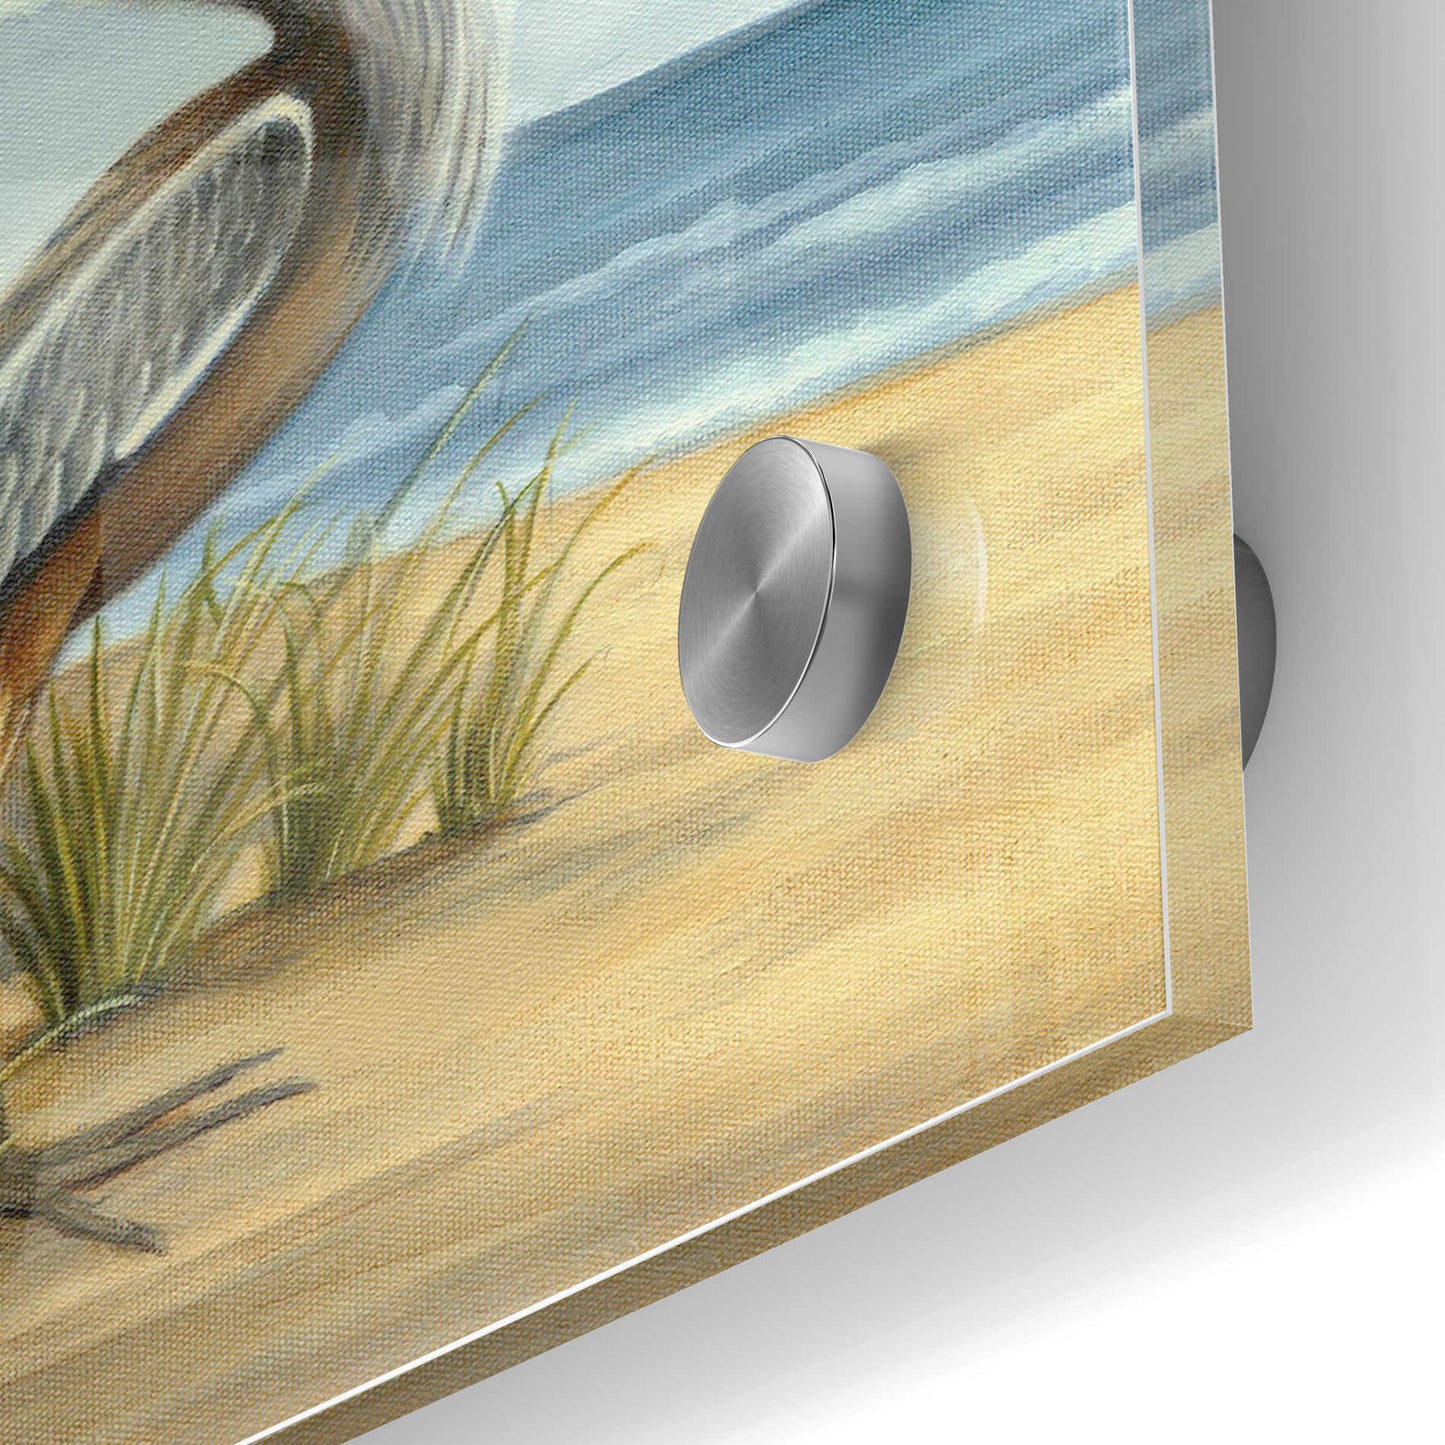 Epic Art 'Shore Bird I' by Ethan Harper Acrylic Glass Wall Art,24x36